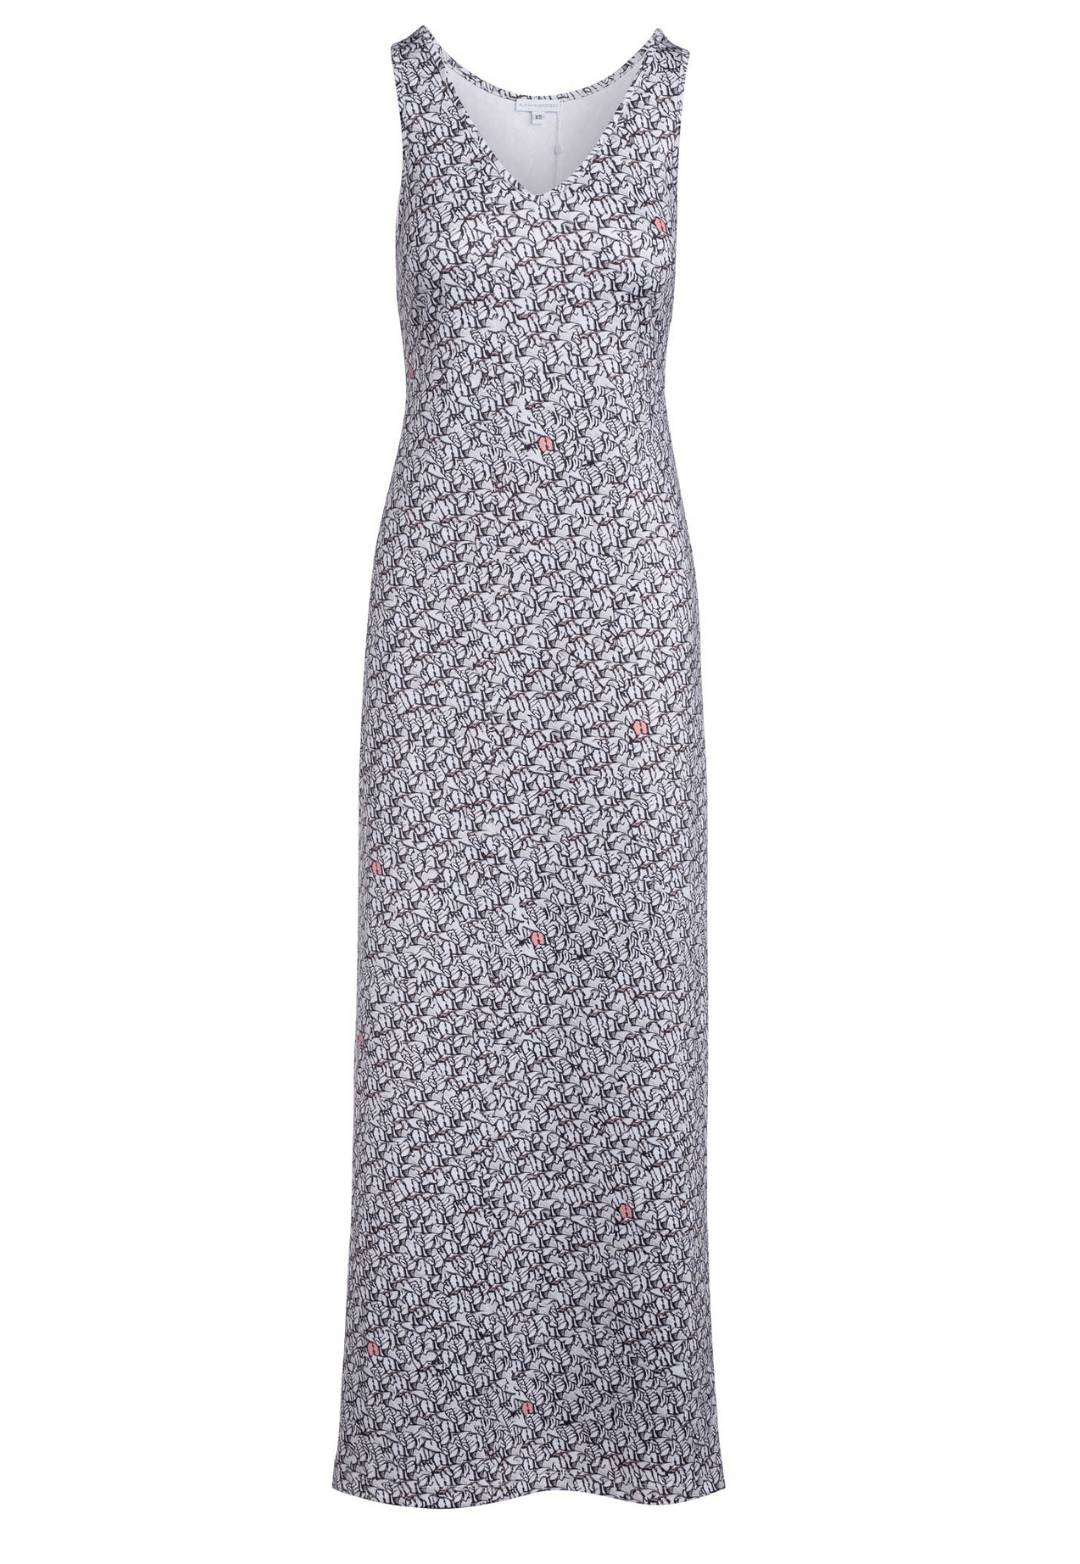 Black and white geometric stretch knit long dress